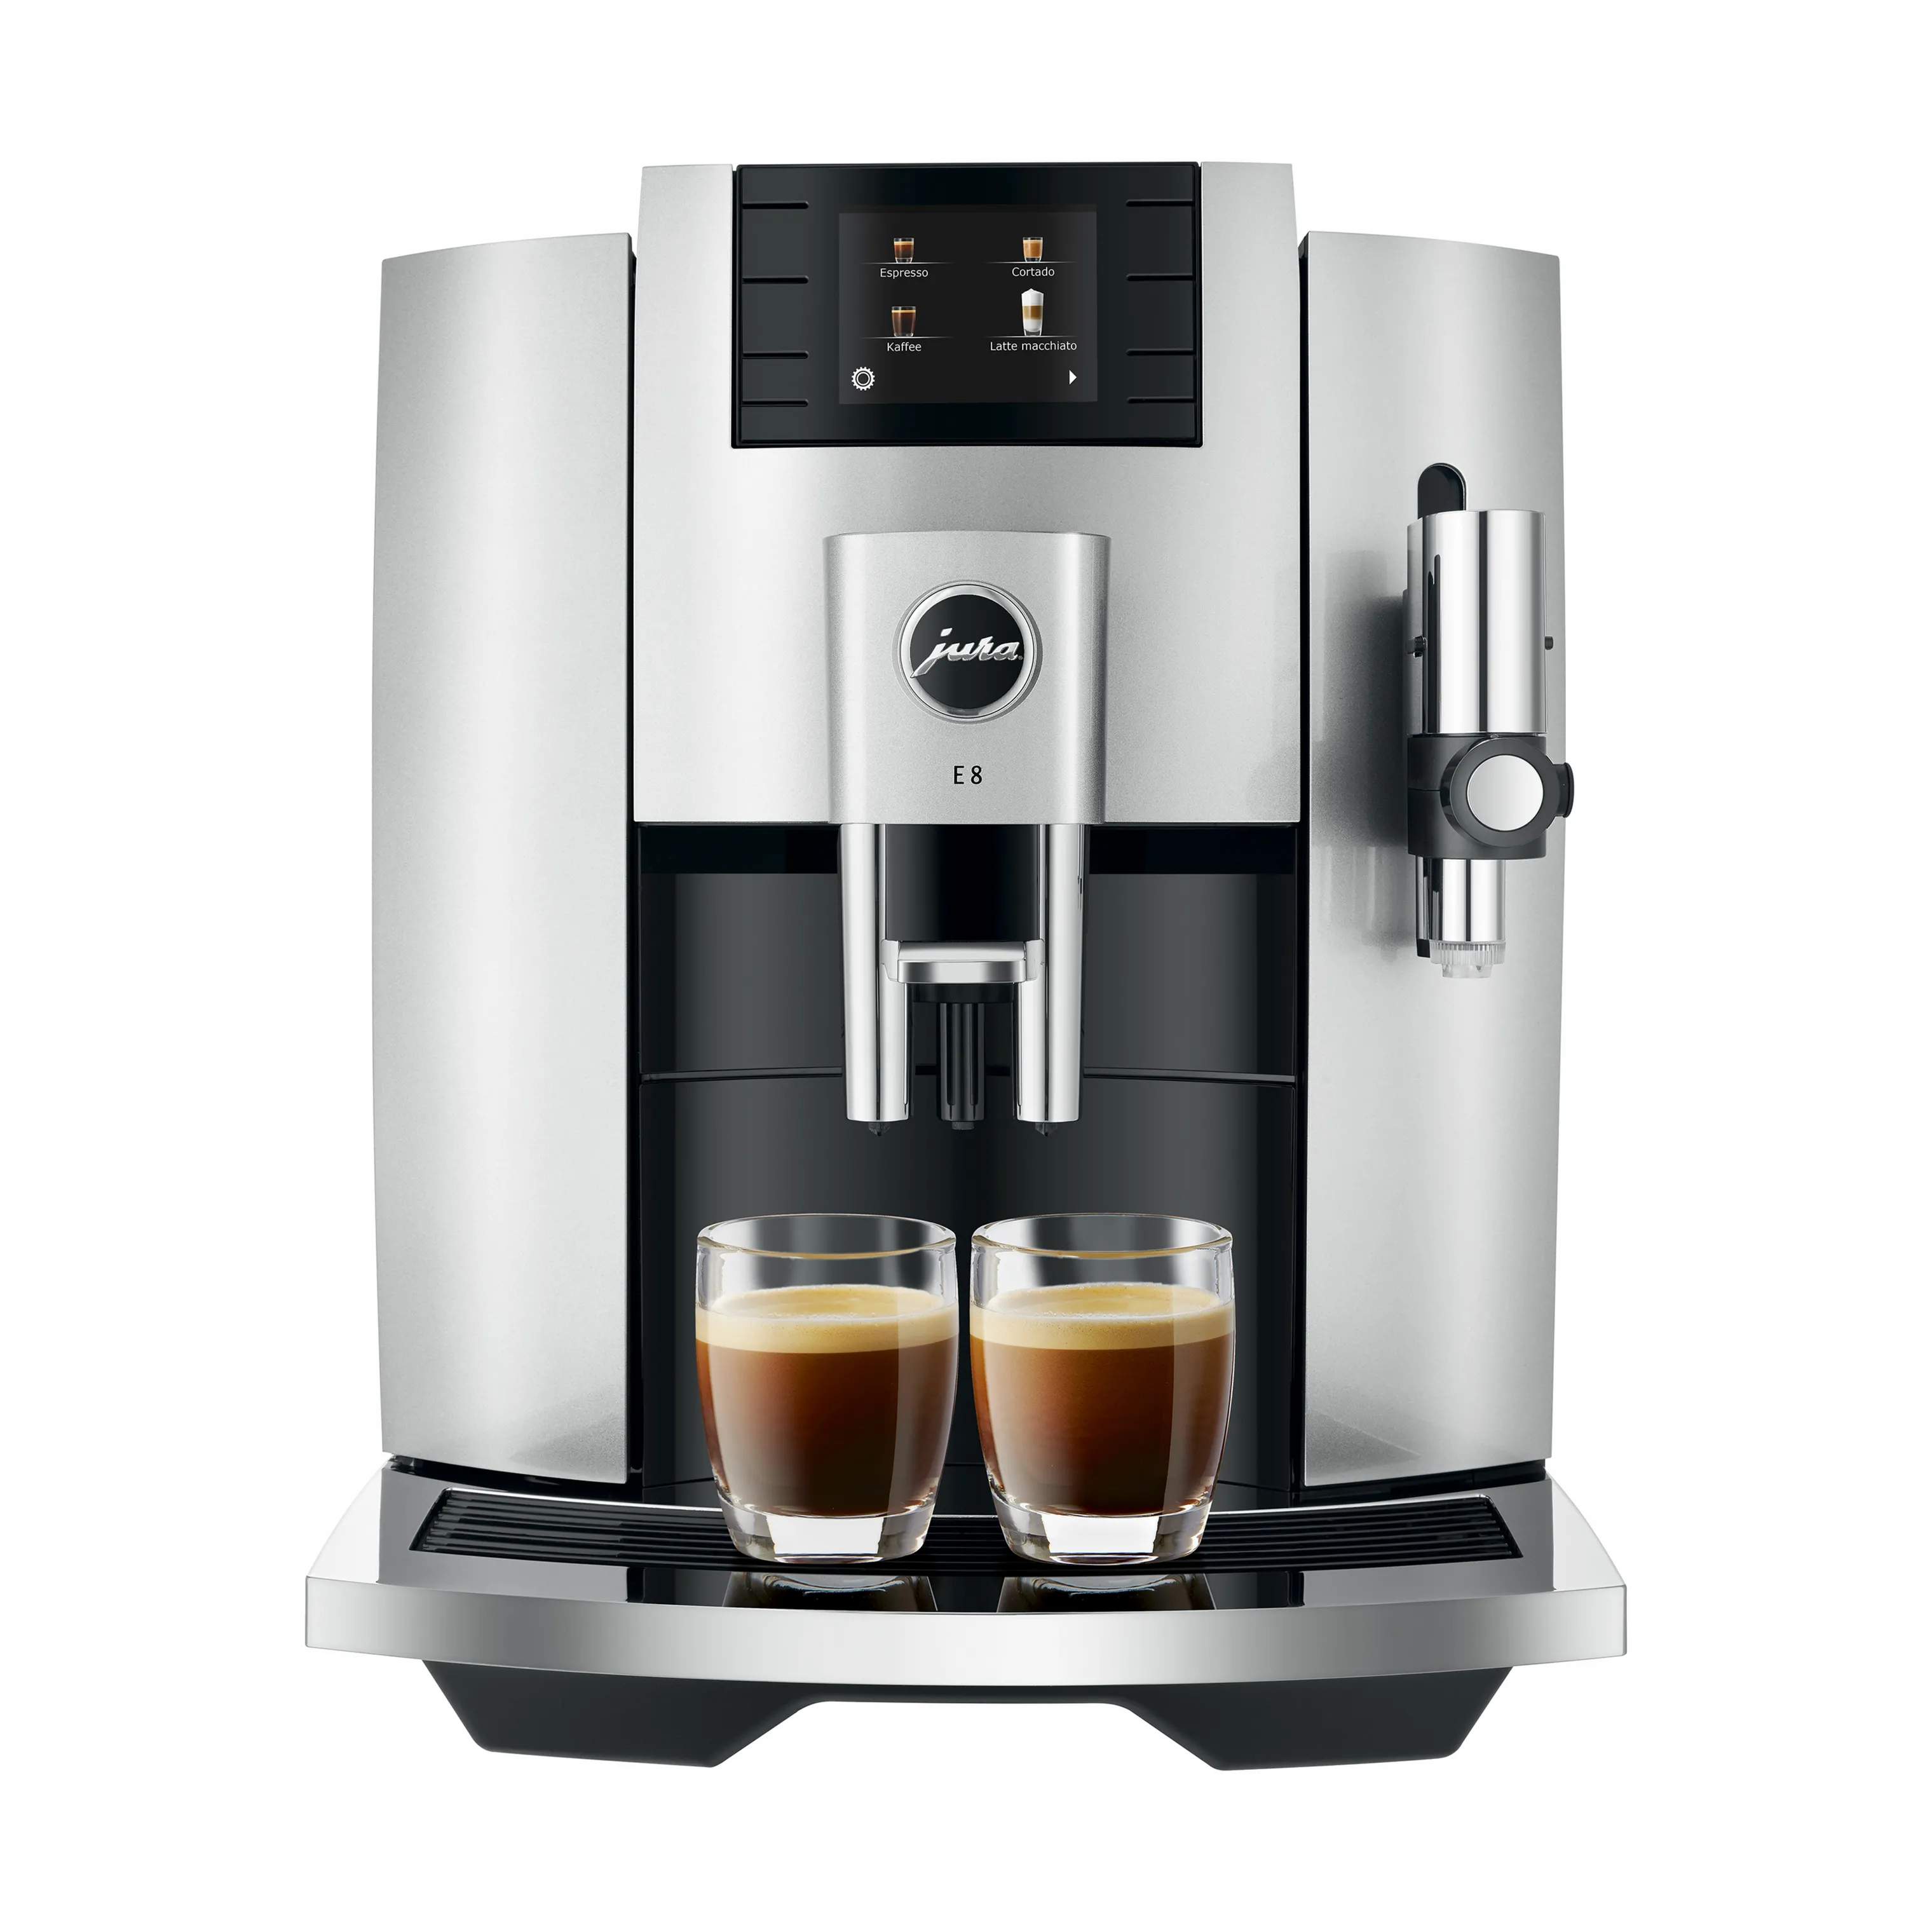 E8 (EB) Kaffemaskine